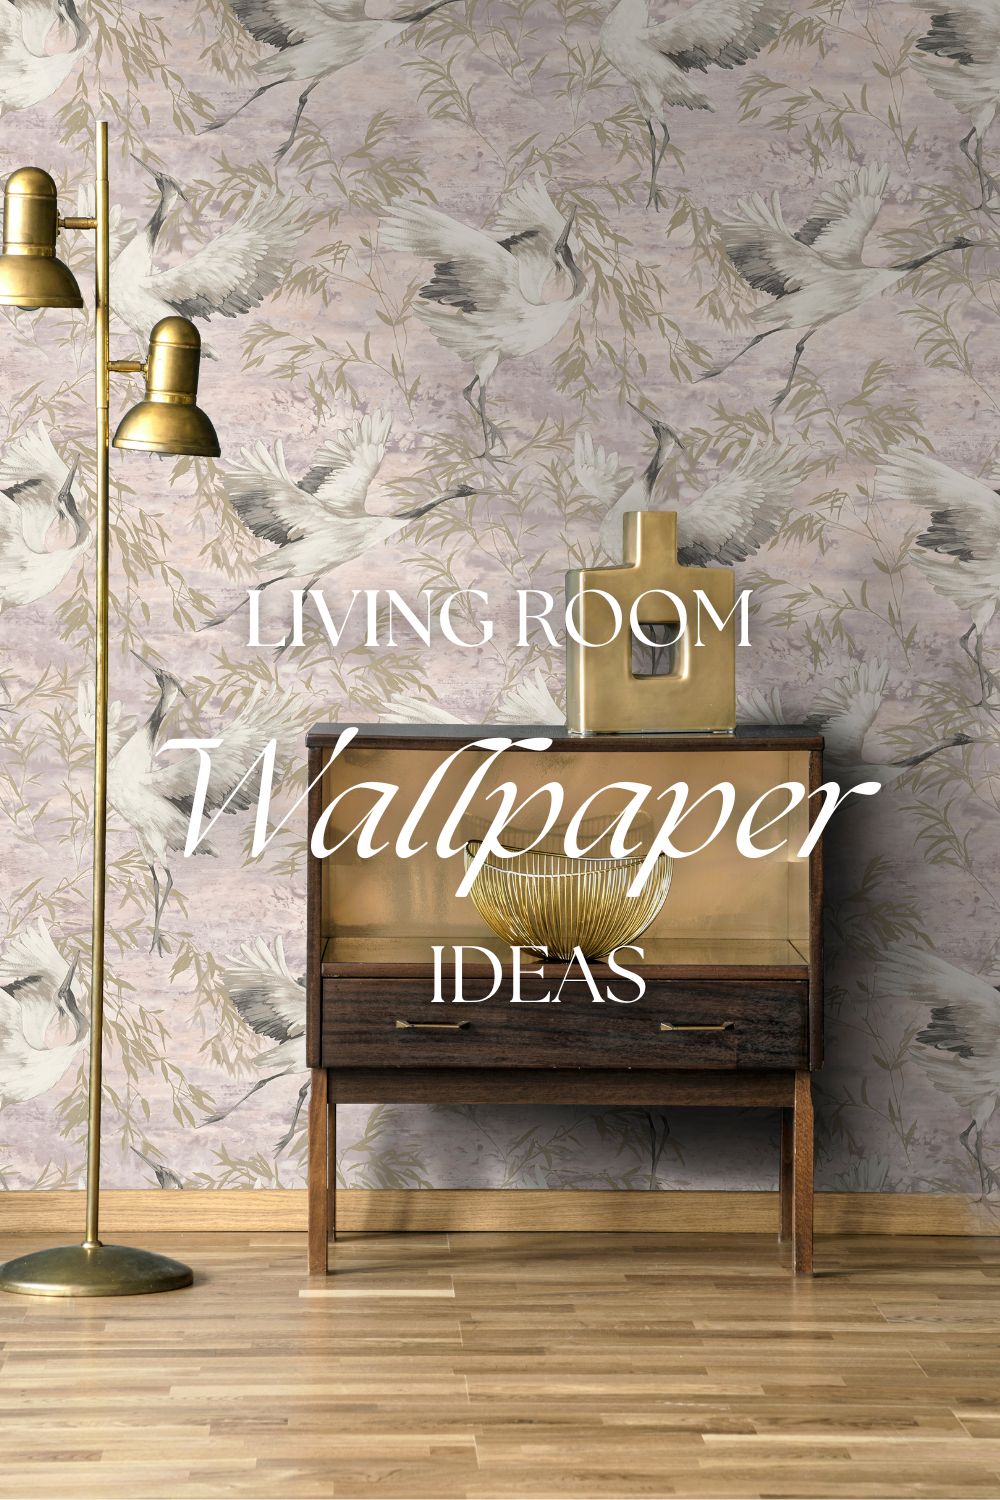 Wallpaper Ideas for Living Room. Choose the right wallpaper for living room space.  A_comp10